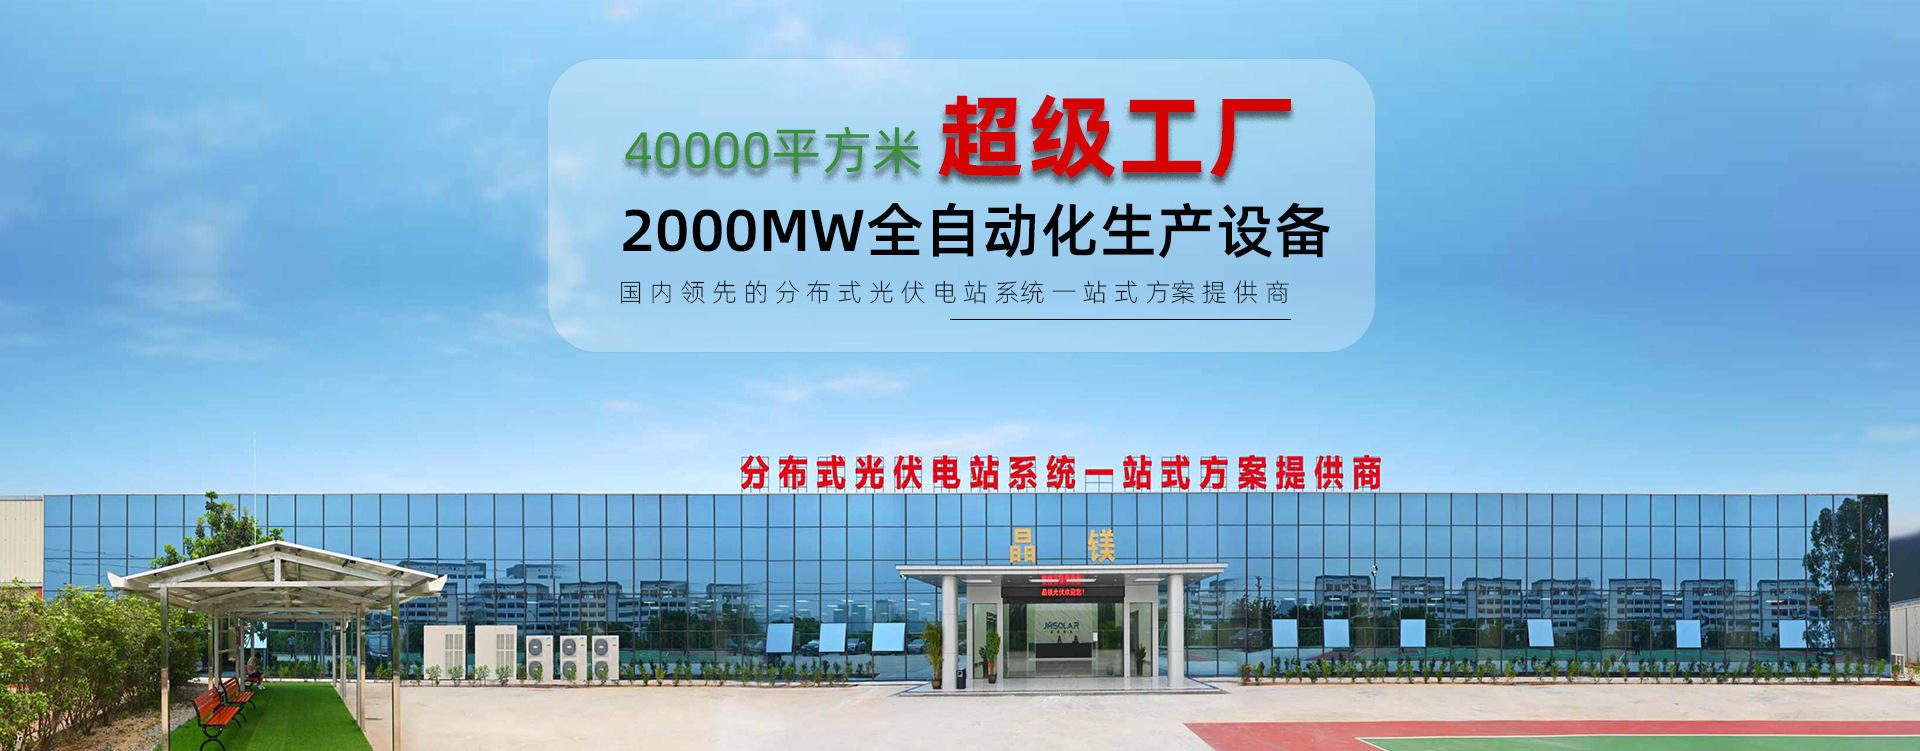 Guangdong Jingmg Solar Energy Co., Ltd